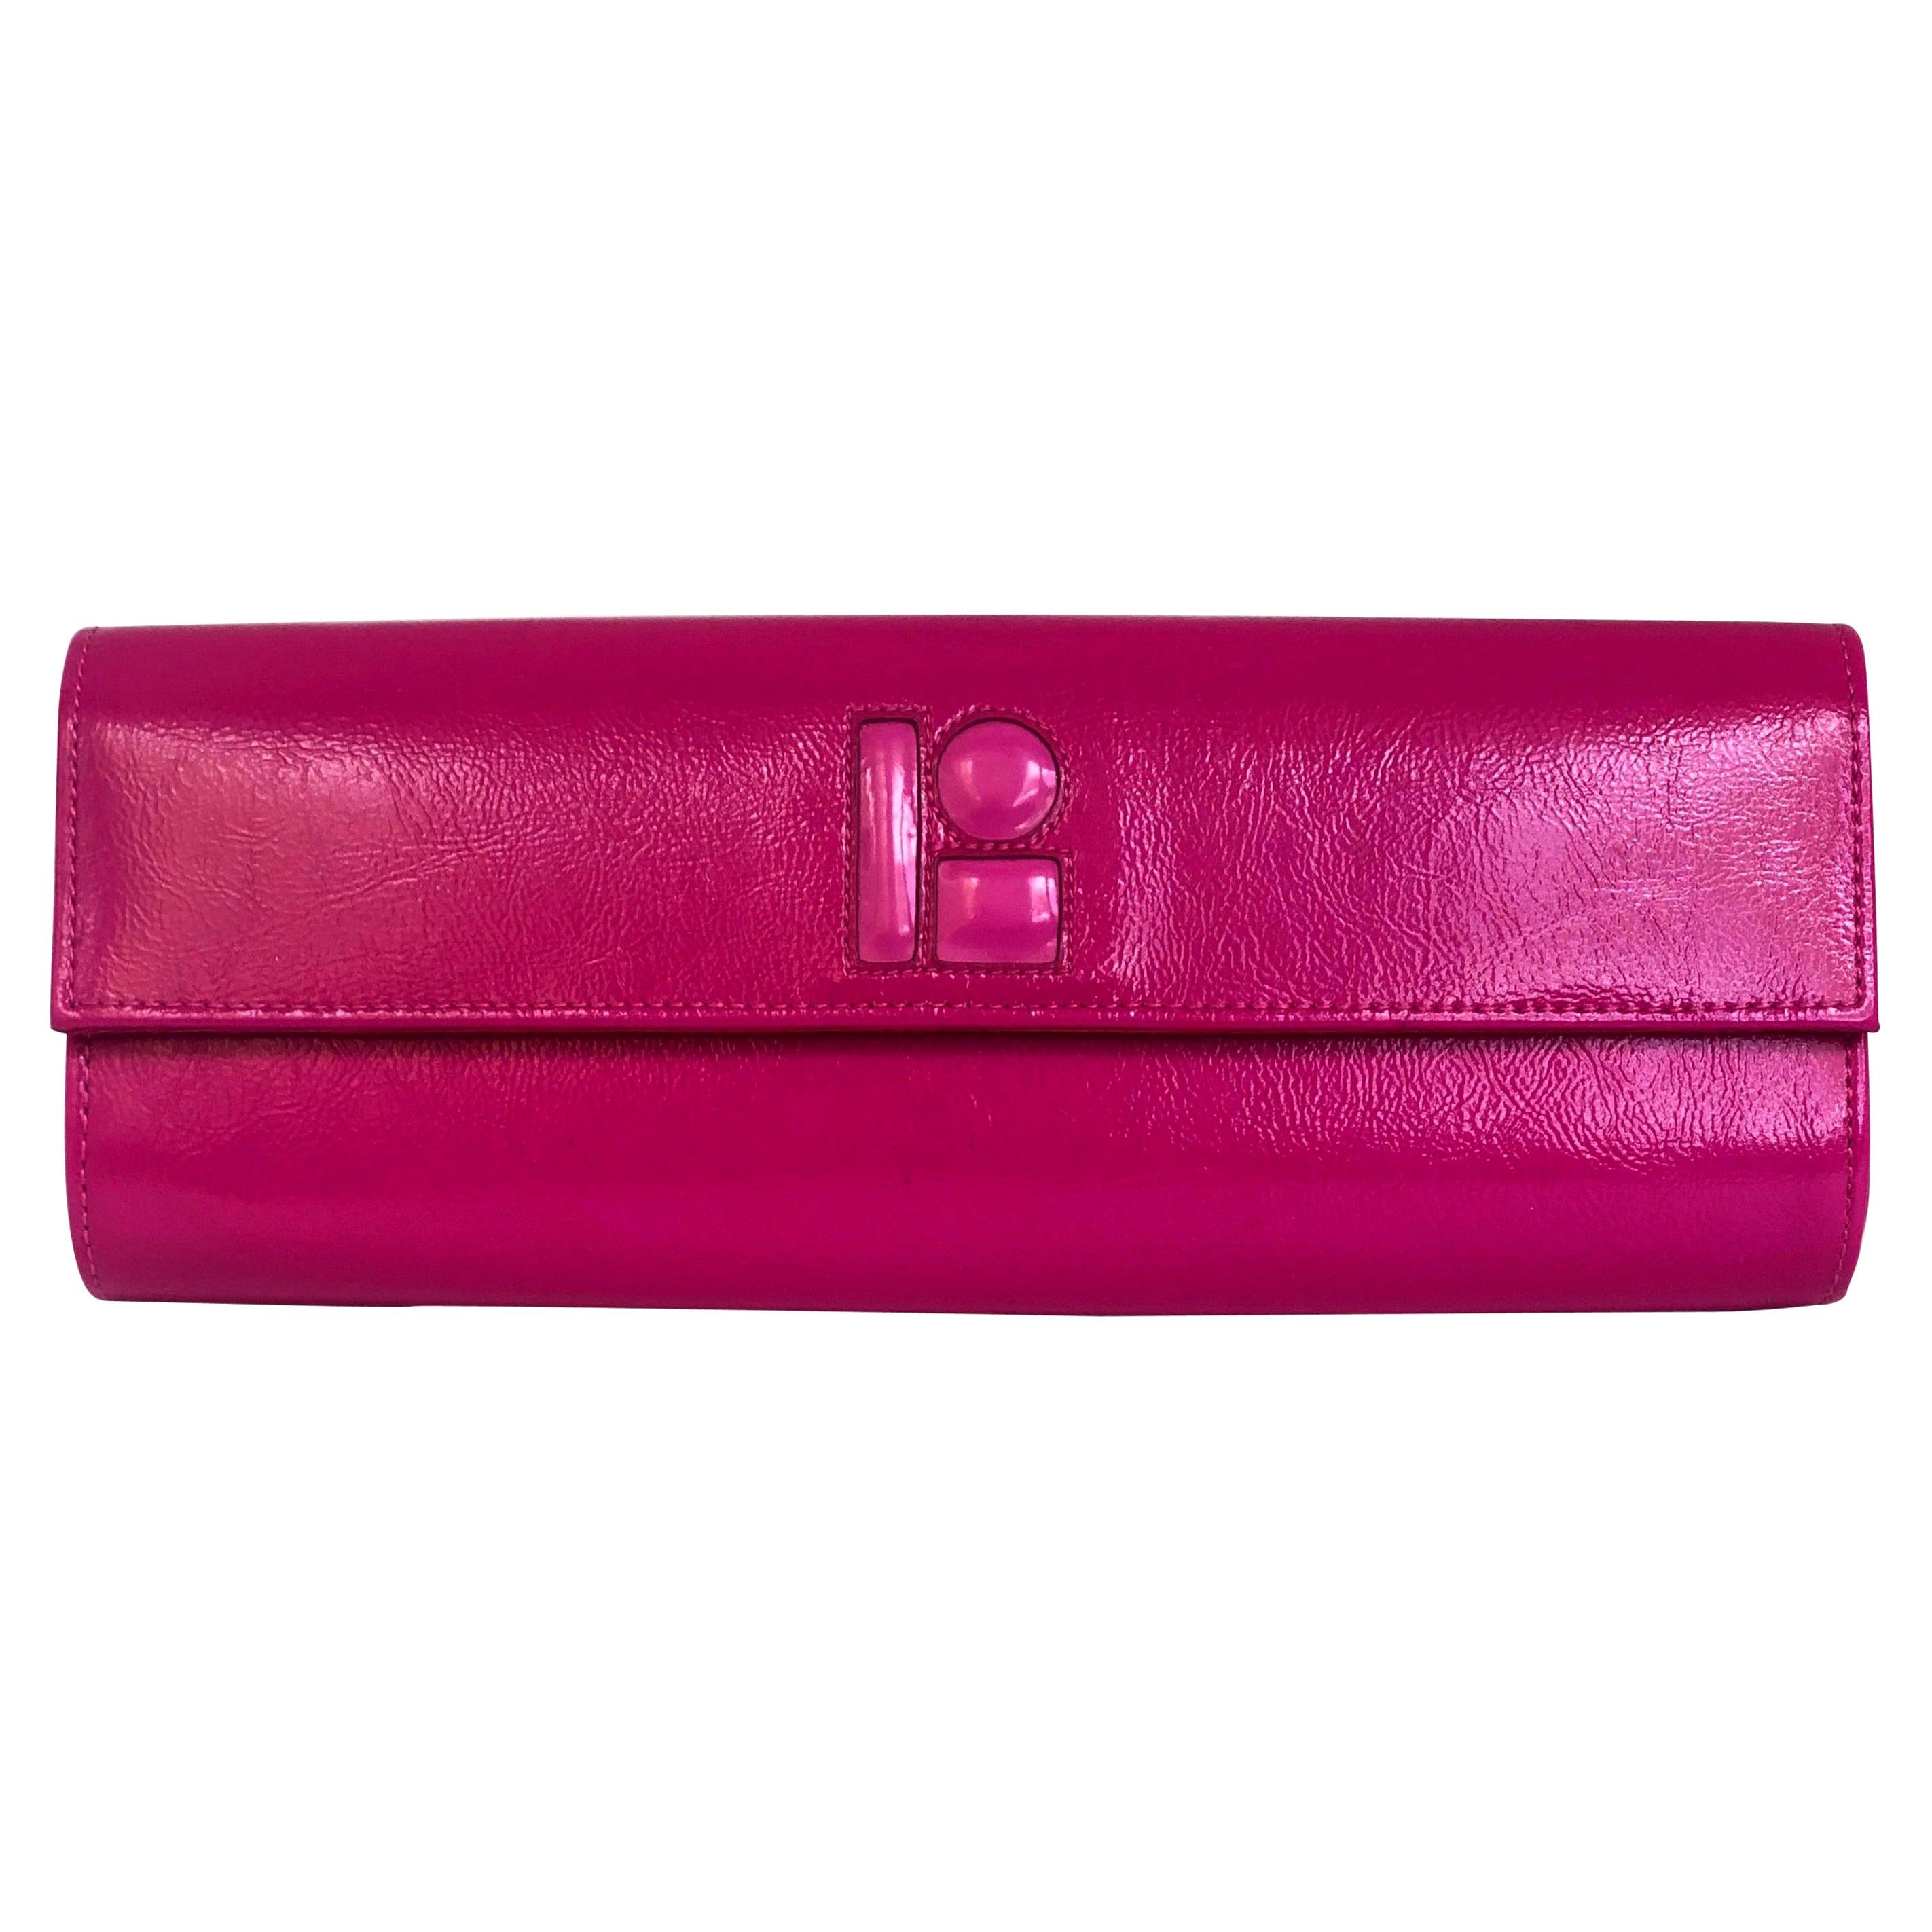 Lisa Perry Mod Fuchsia Pink Patent Leather Clutch Handbag w/ Magnetic Closure 